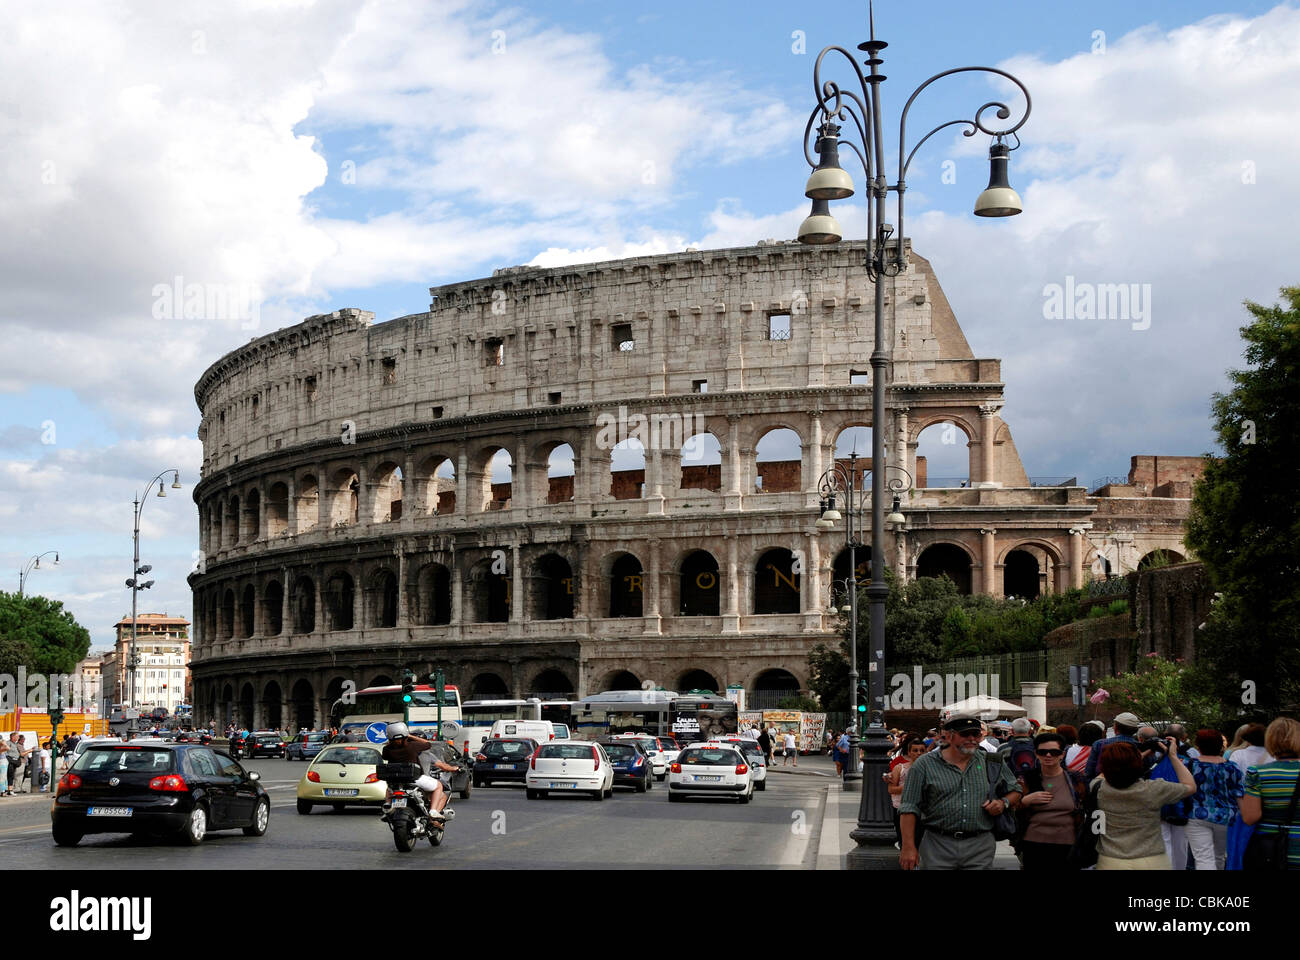 Colosseum en la Plaza del Coliseo en Roma. Foto de stock